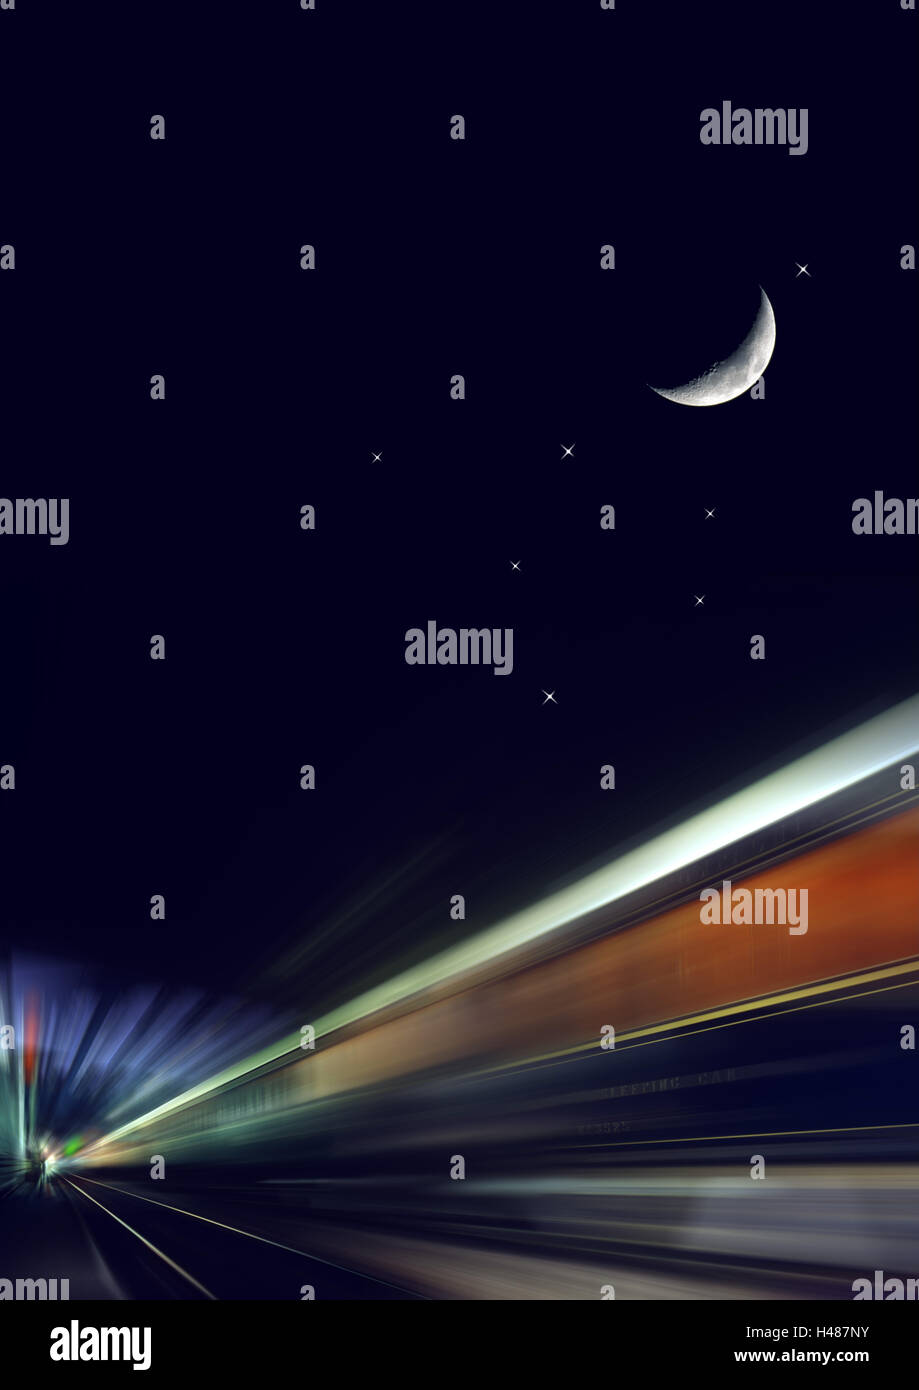 France, Paris, Gare de l'Est, passenger train, sleeping car, moon, stars, blur, Stock Photo